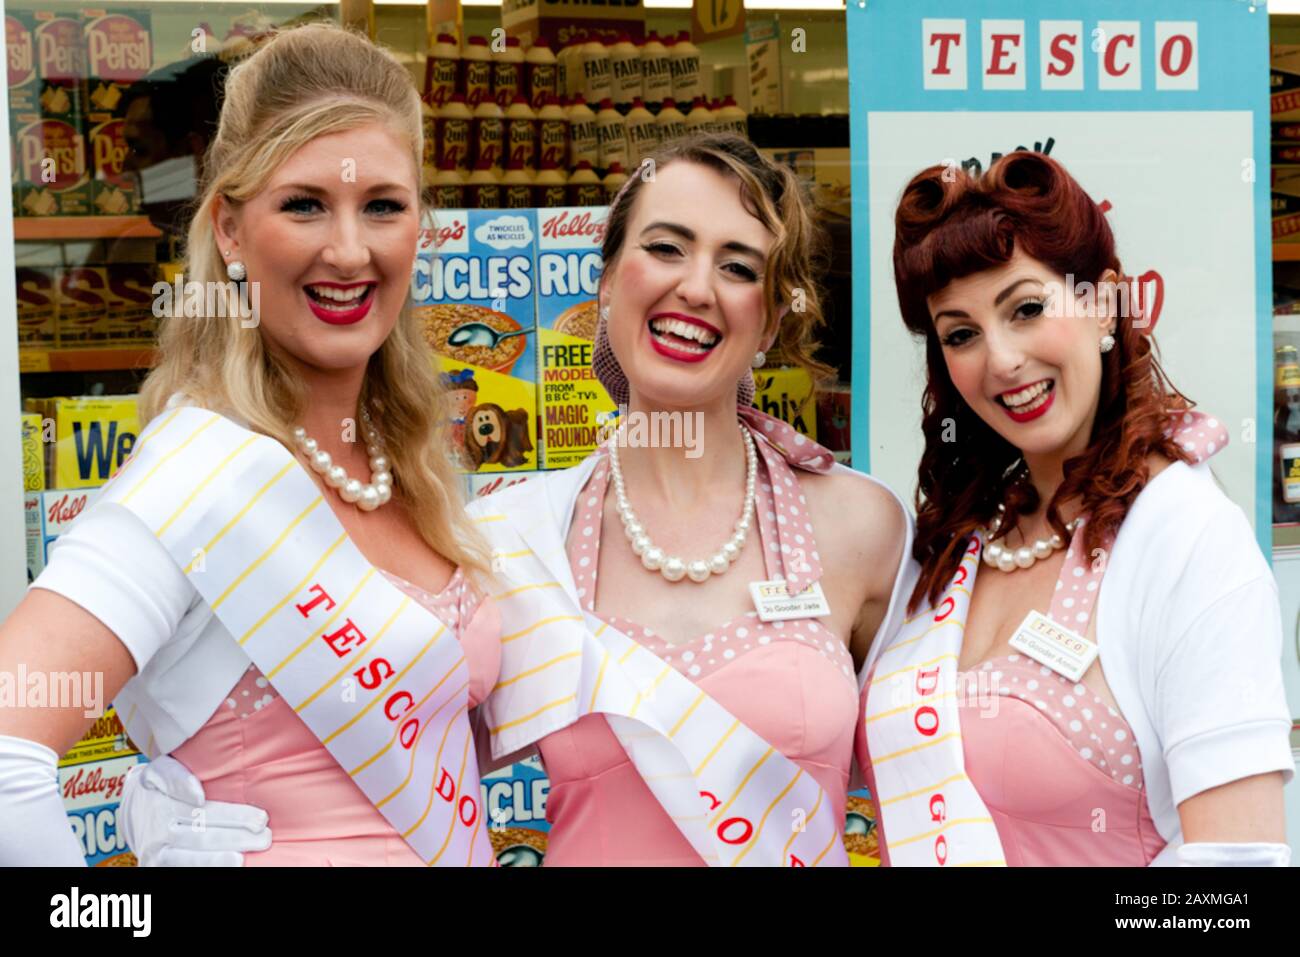 Drei "Tesco Girls" beim Goodwood Revival Meeting 2013. Stockfoto